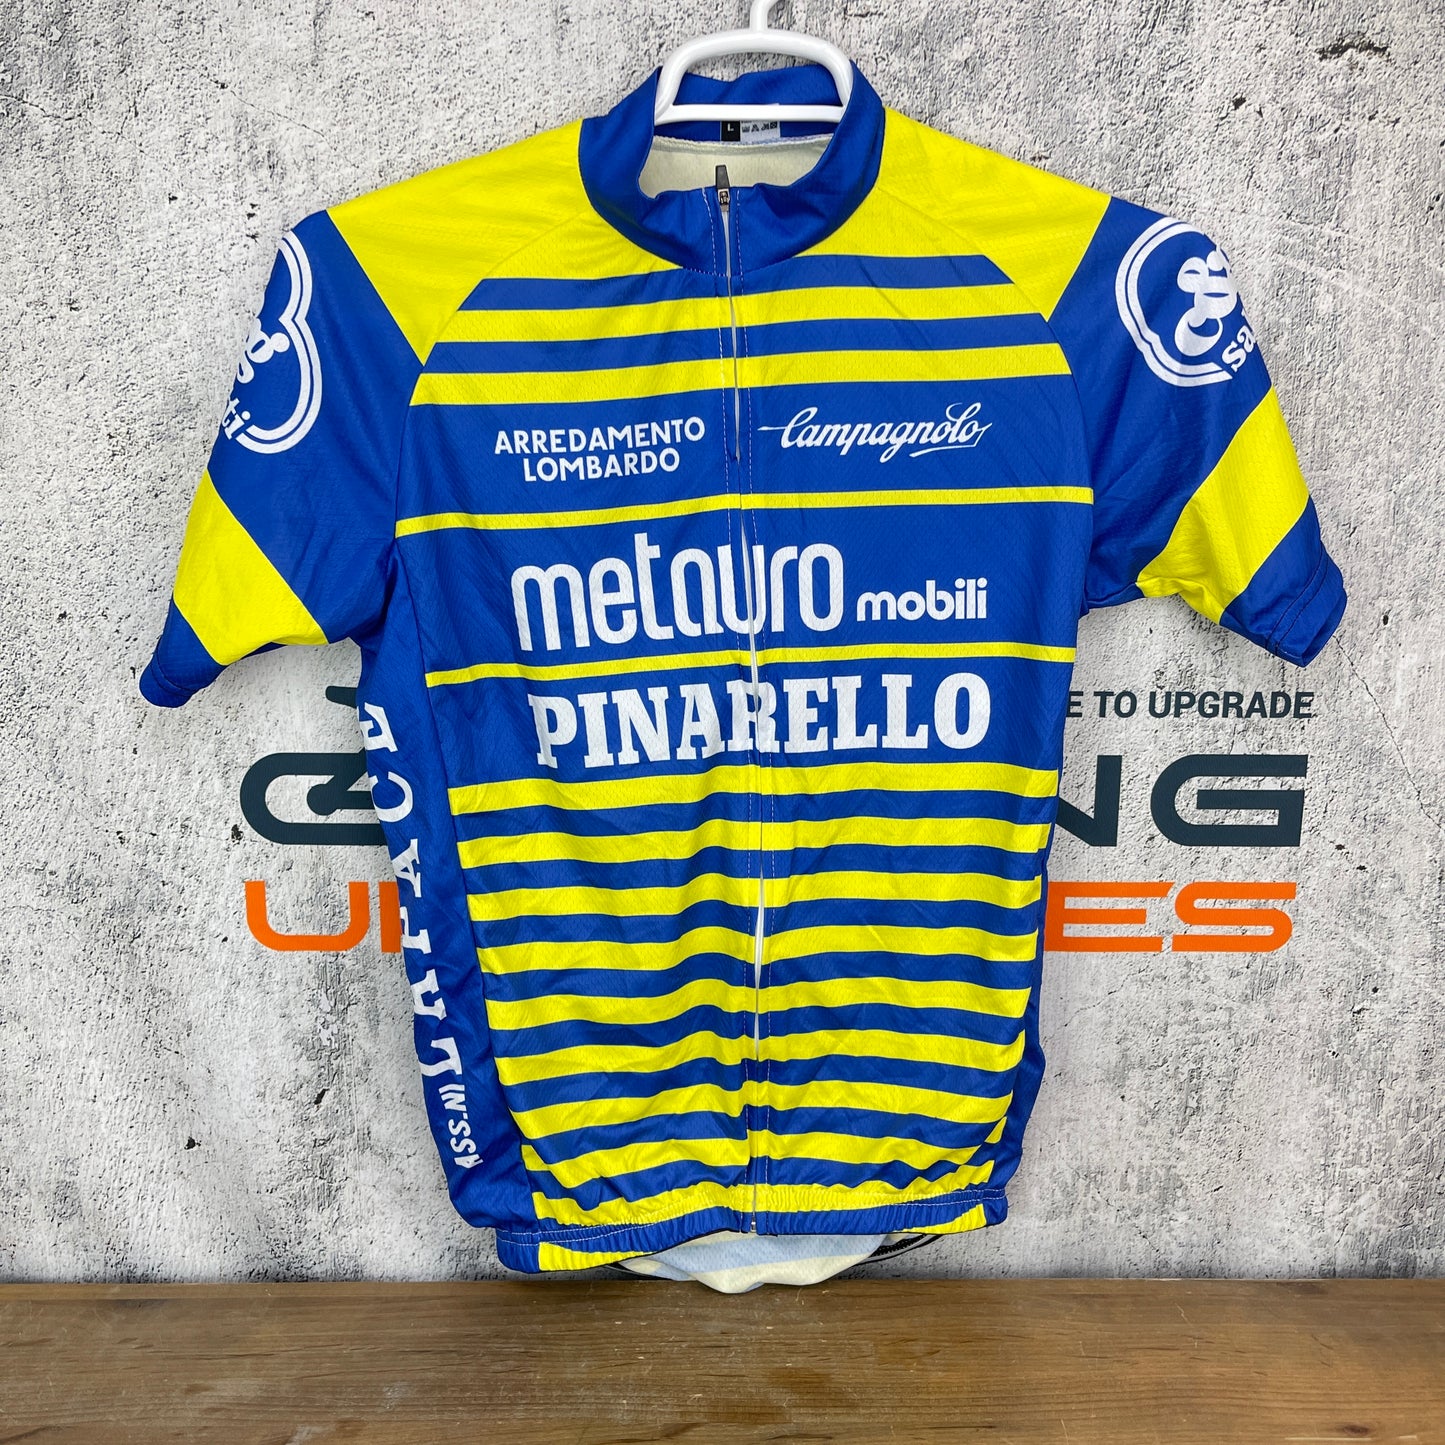 Pinarello Metouro Mobili Large Yellow/Blue Men's Cycling Jersey Short Sleeve